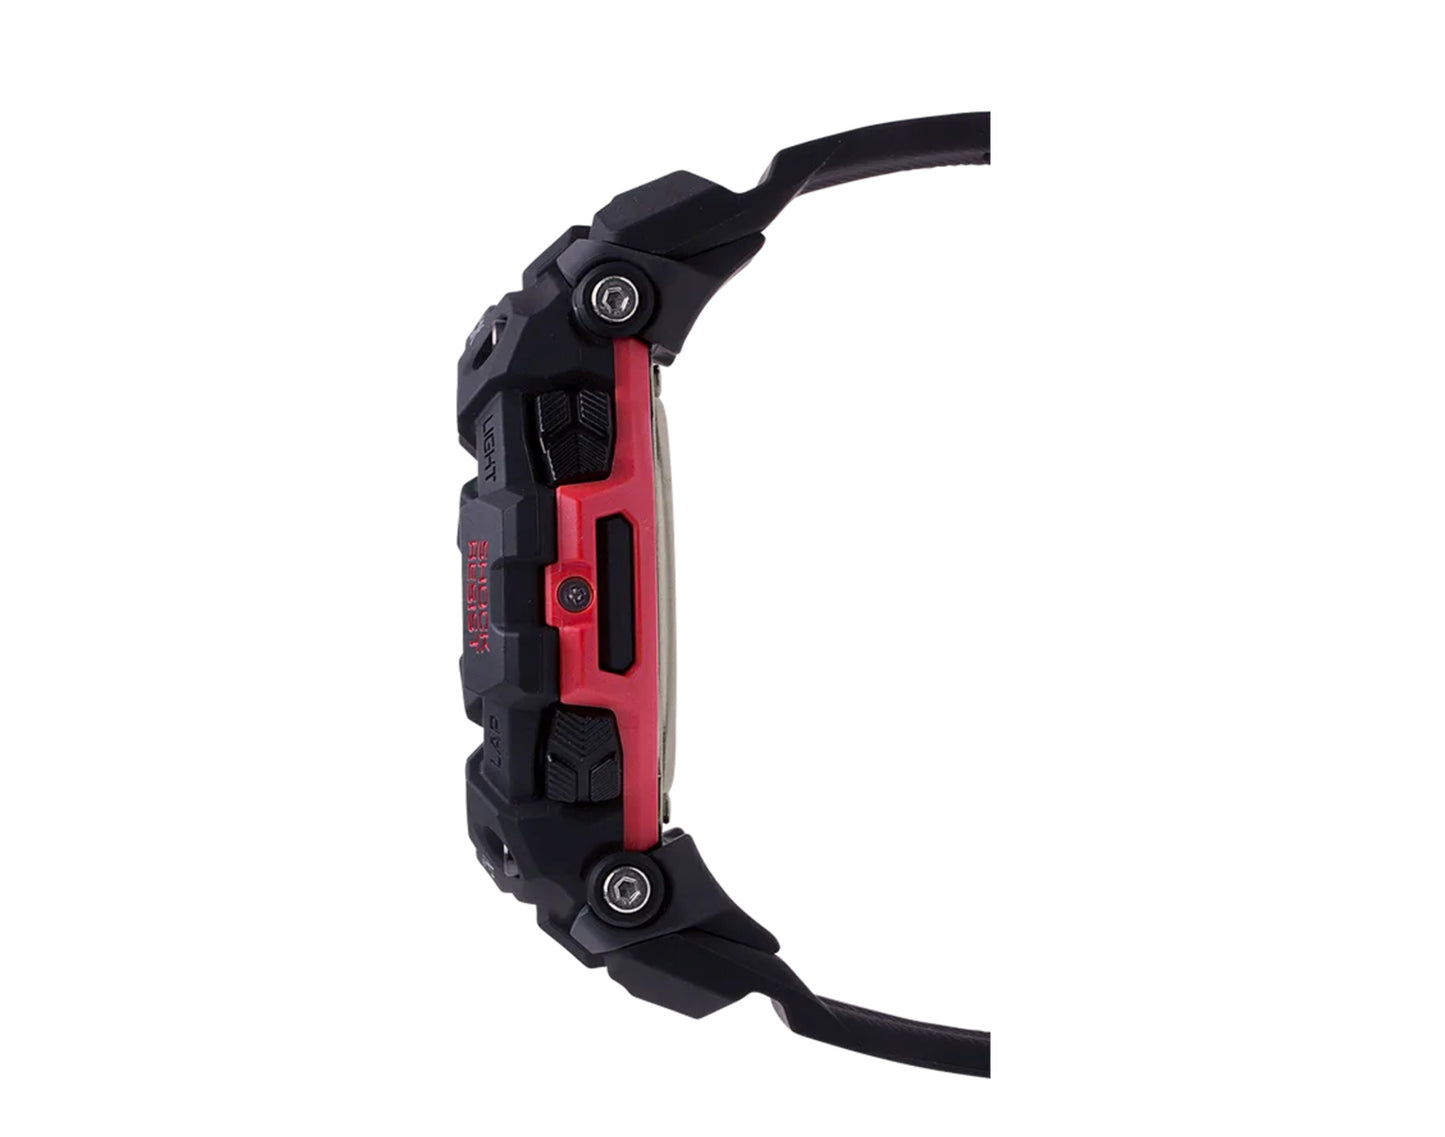 Casio G-Shock GBD100 Digital Sport Bluetooth Fitness Black/Red Watch GBD100-1